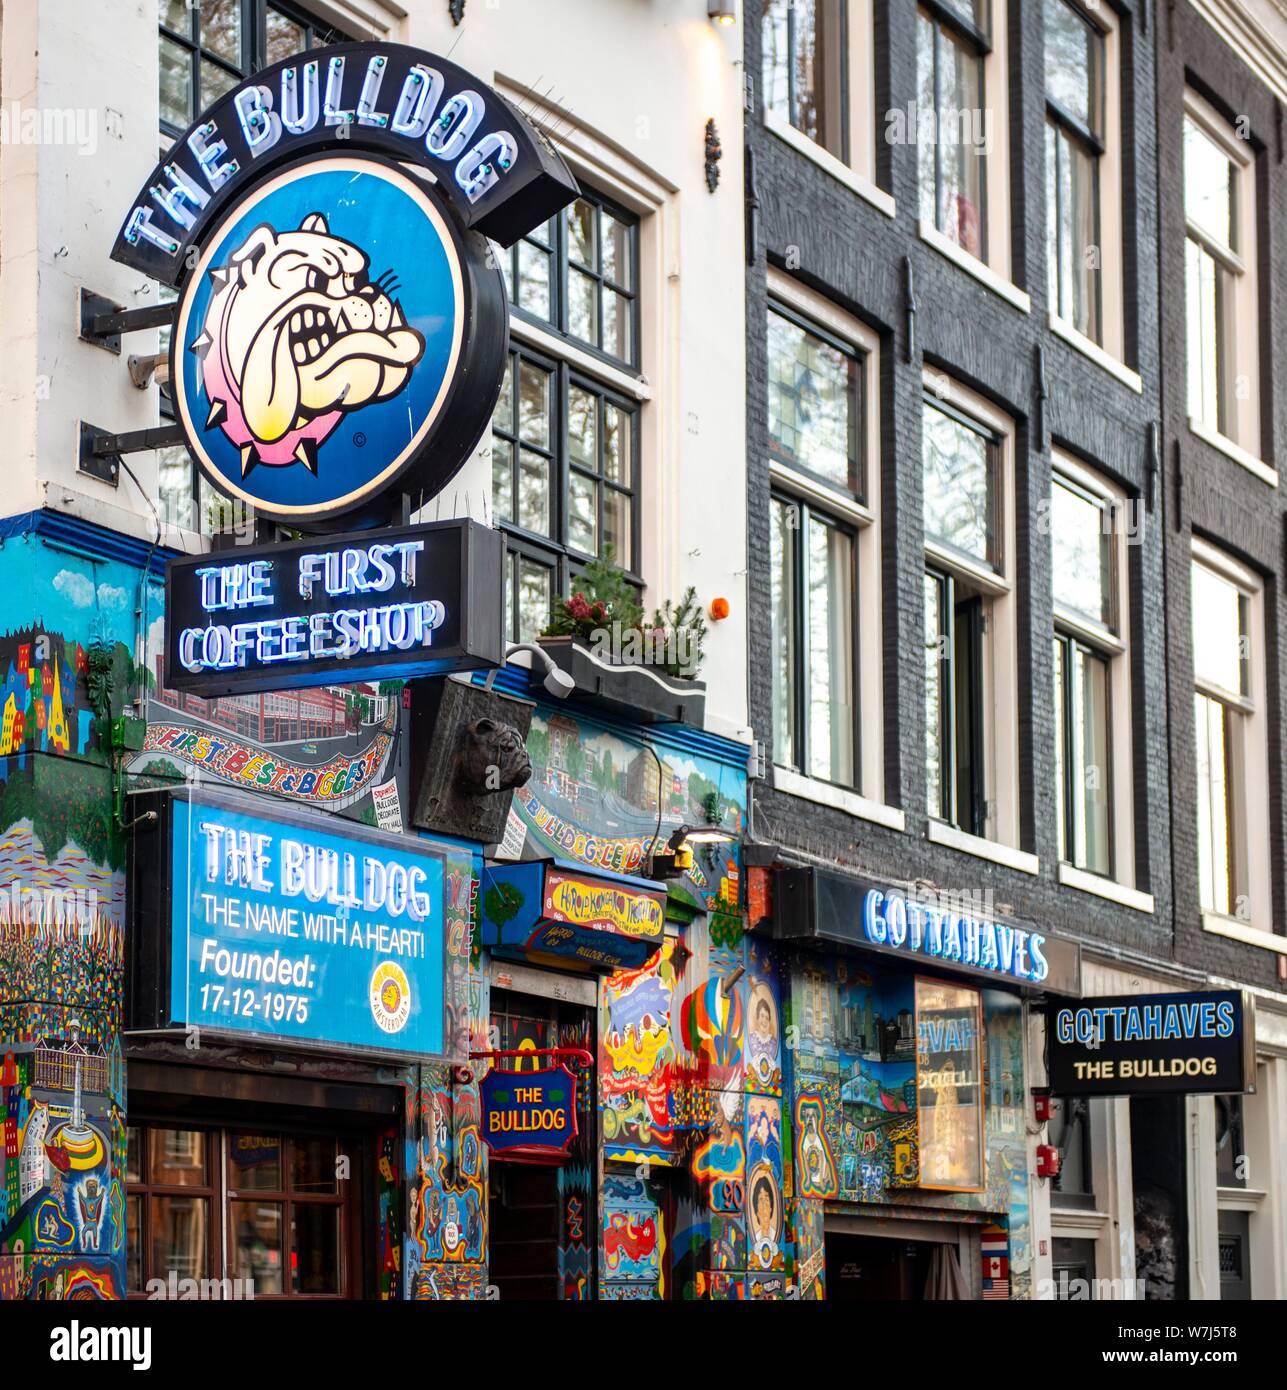 Bulldog coffeeshop amsterdam hi-res stock photography and images